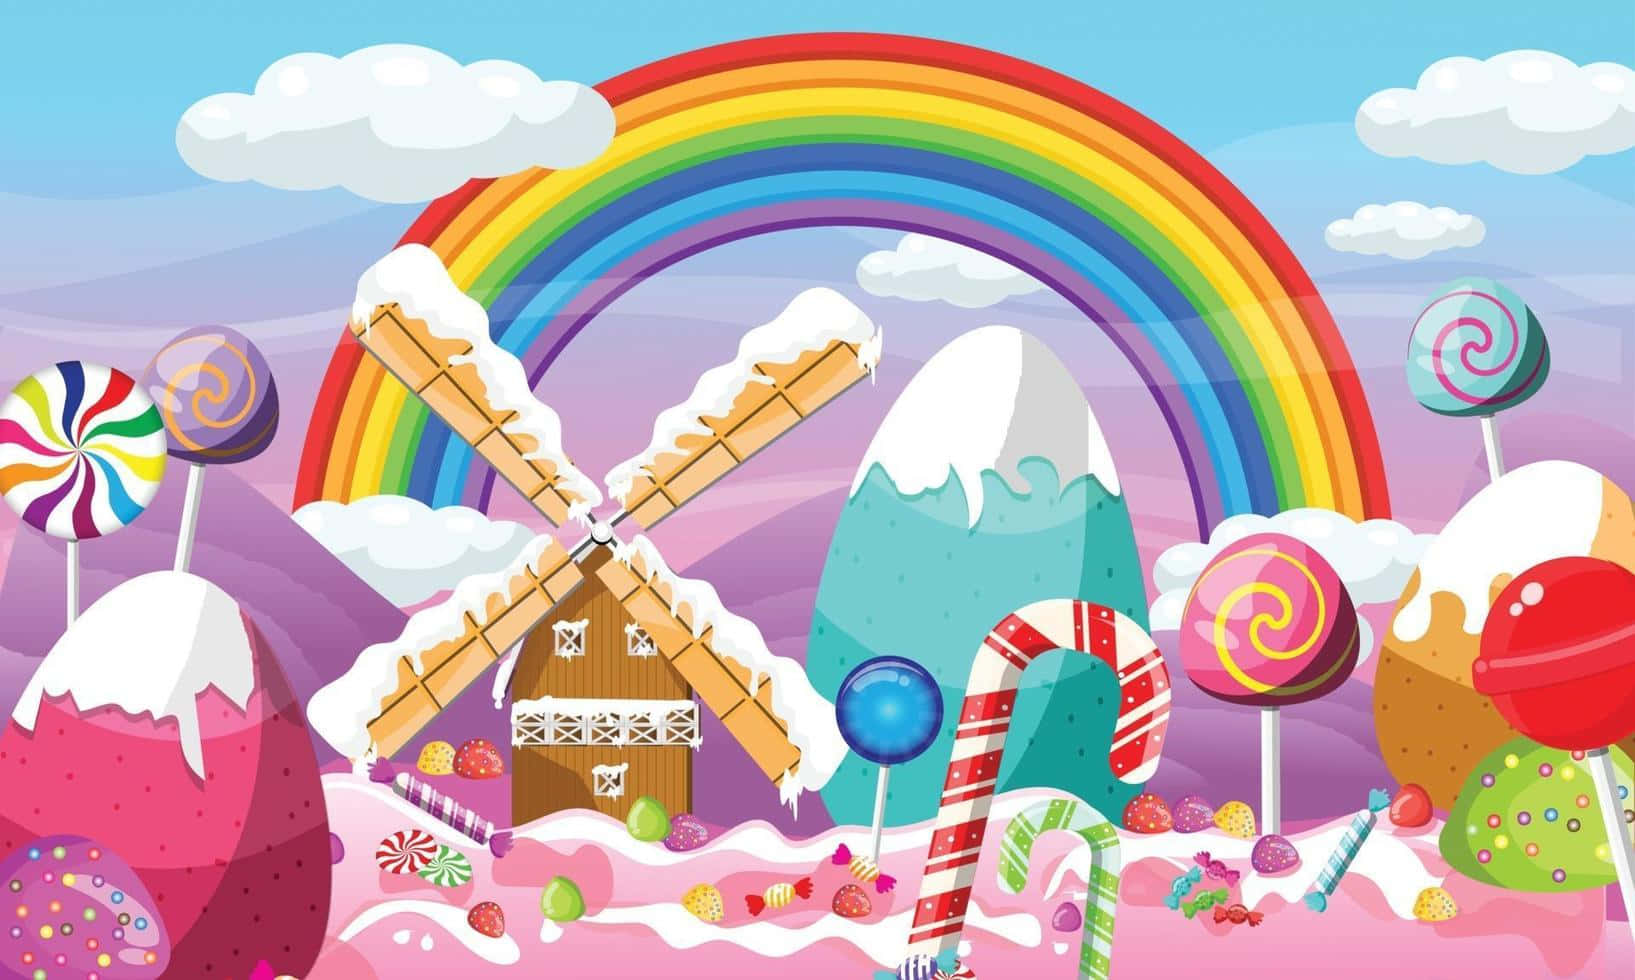 Candy Wallpaper Images  Free Download on Freepik